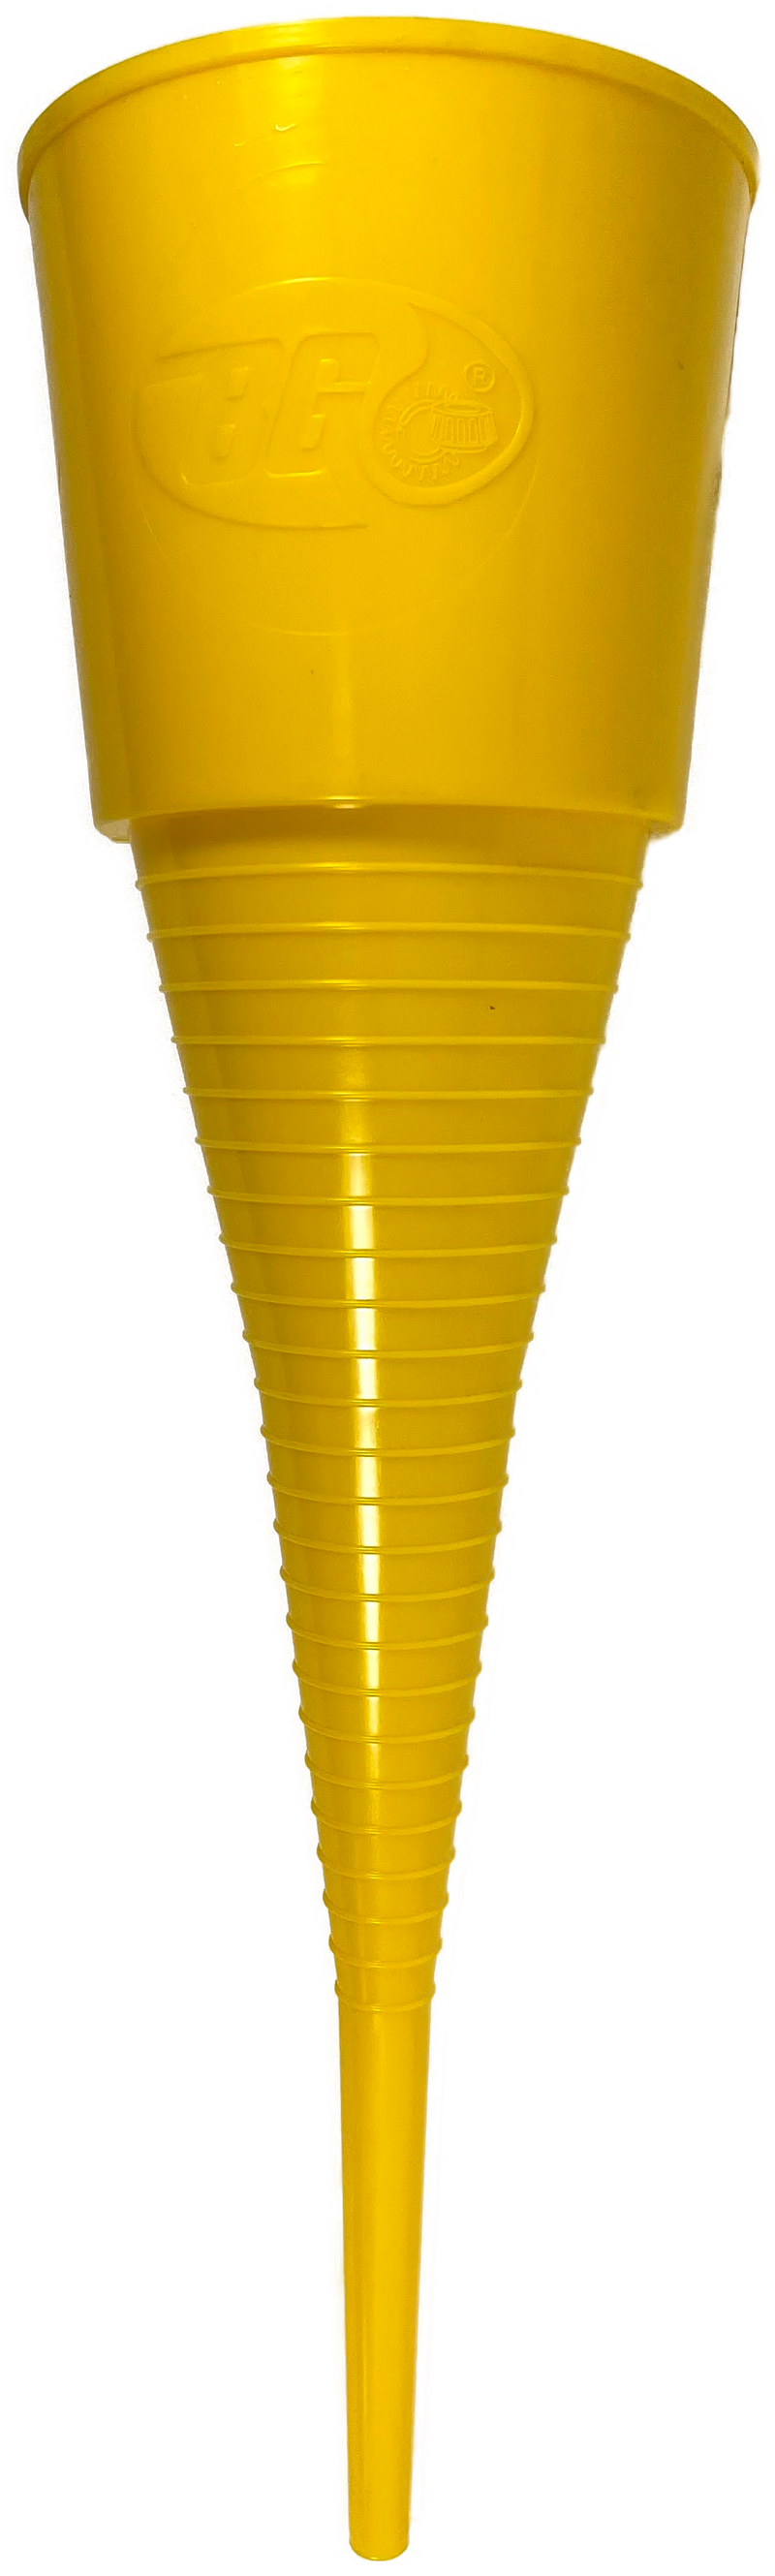 BG's Big Yellow Funnel